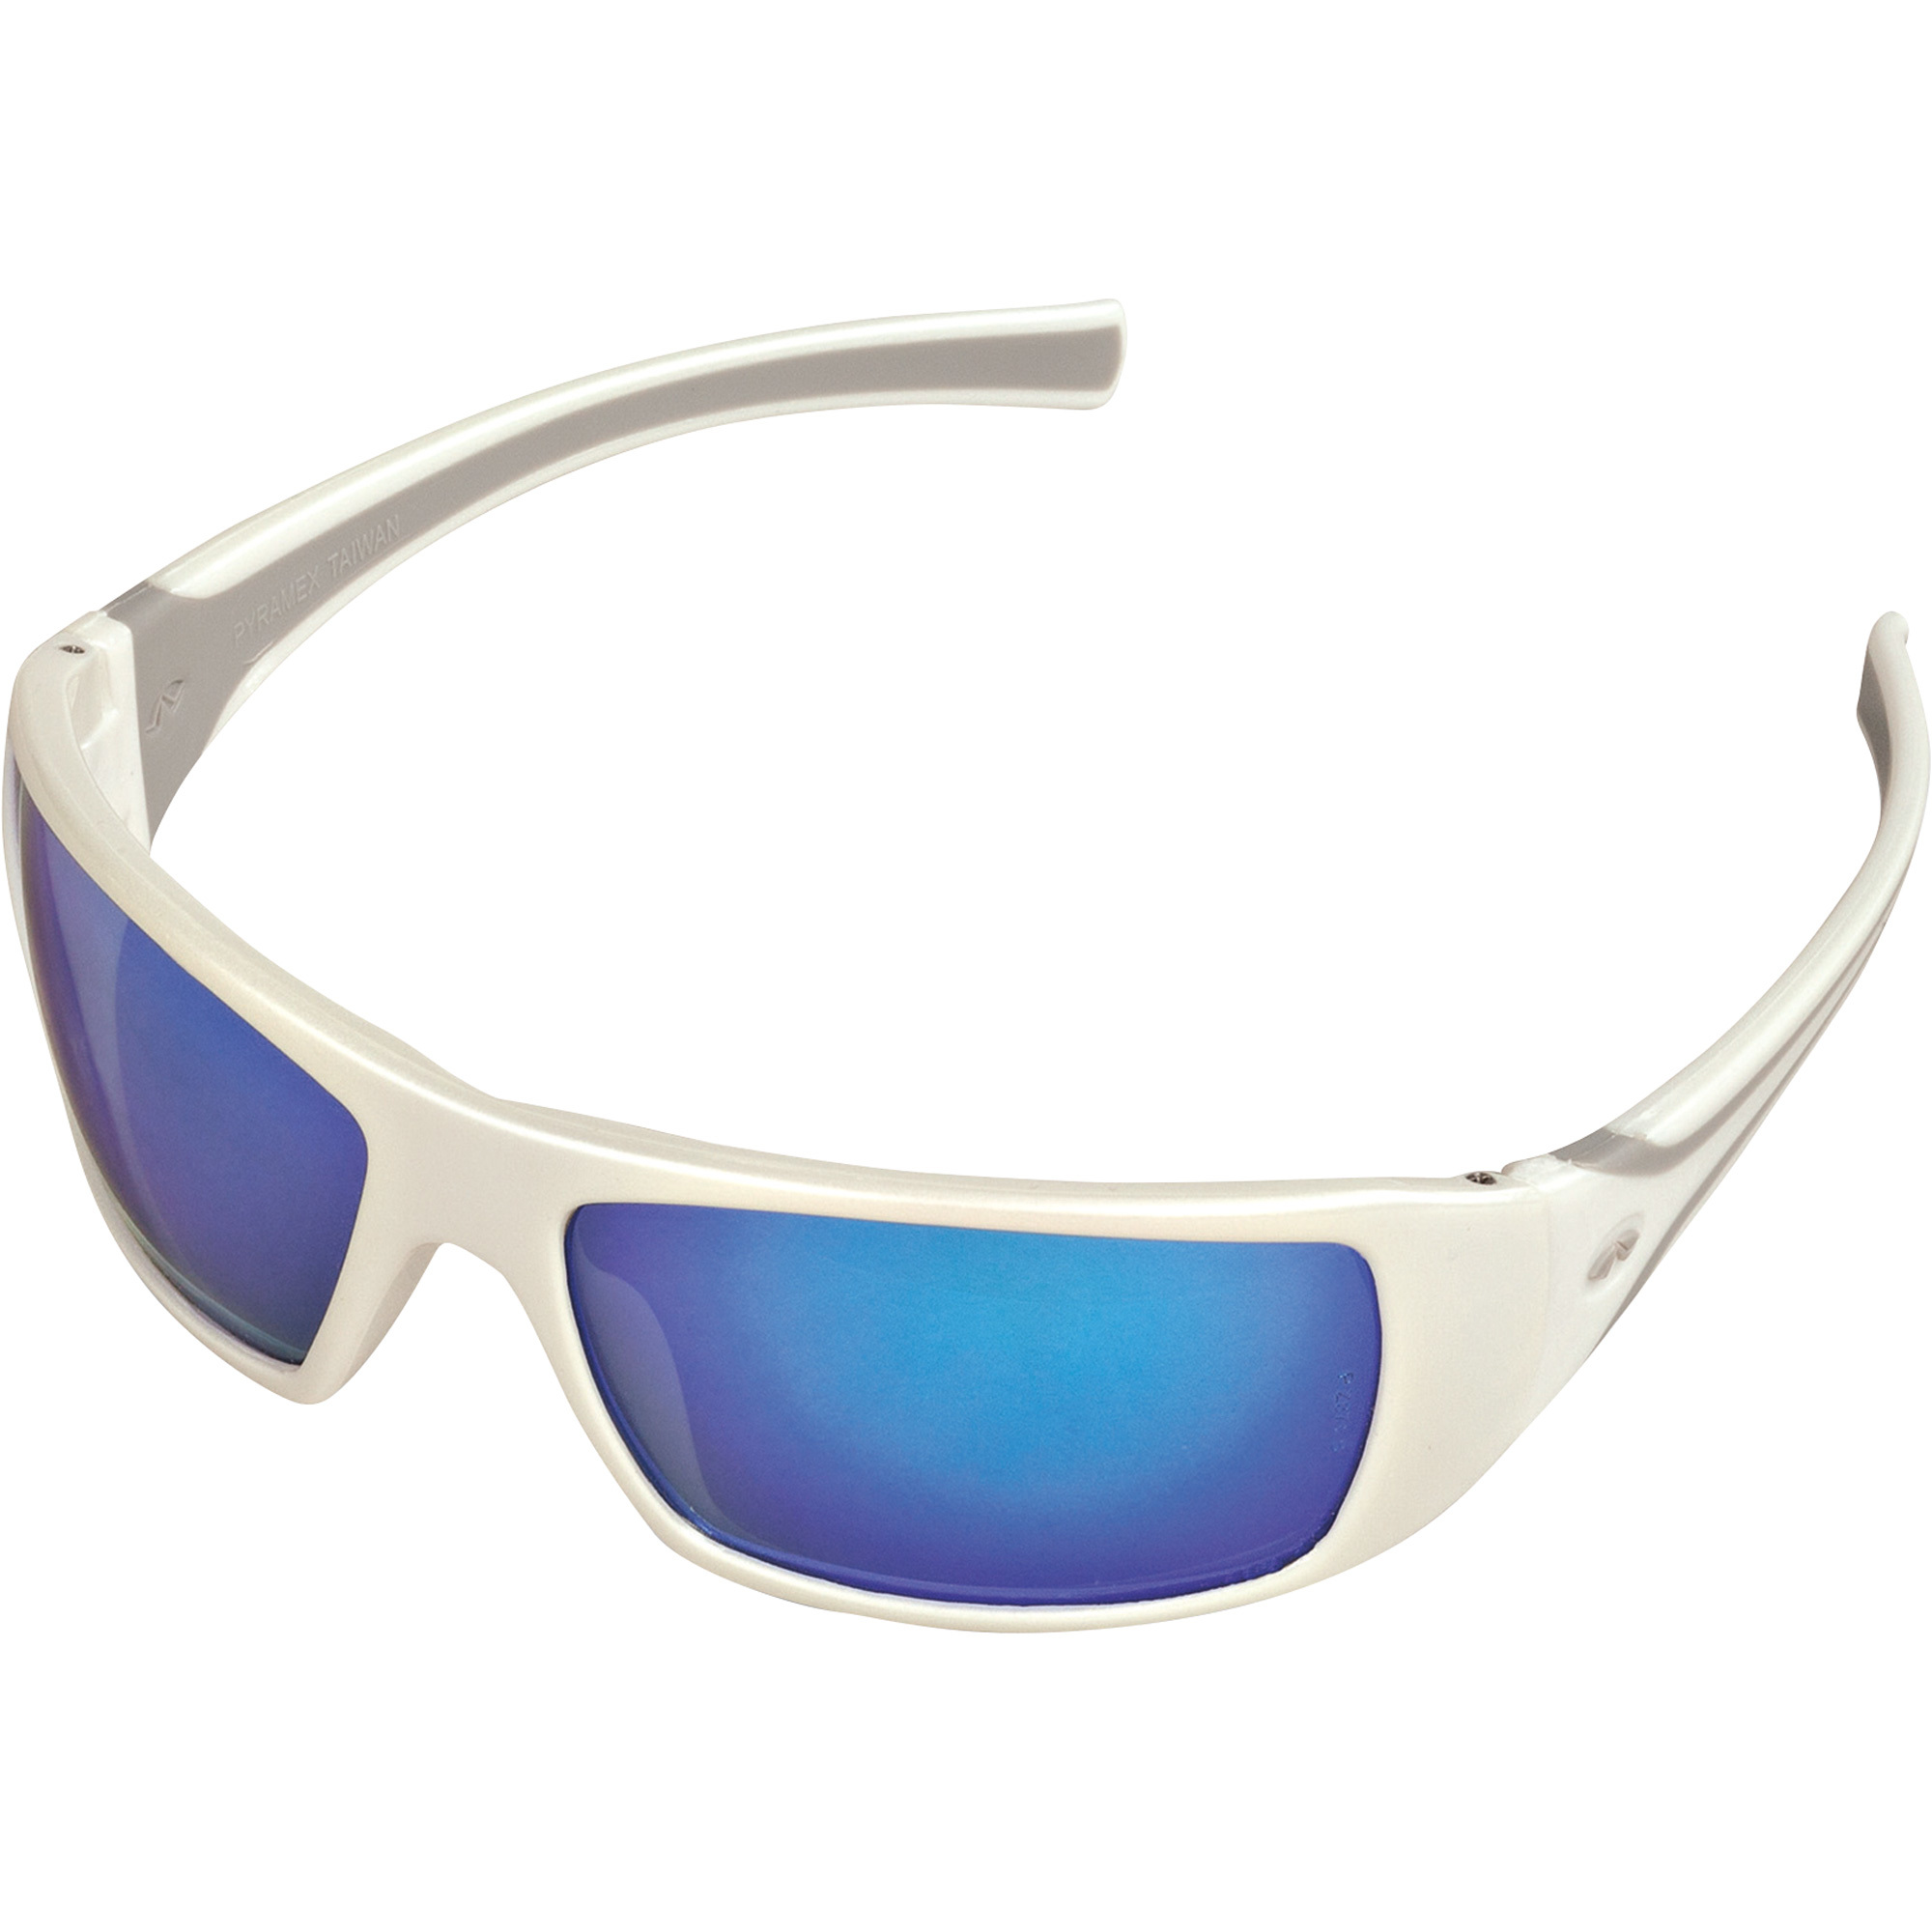 STIHL White Ice Safety Glasses, Blue Mirror, Model 7010 884 0366